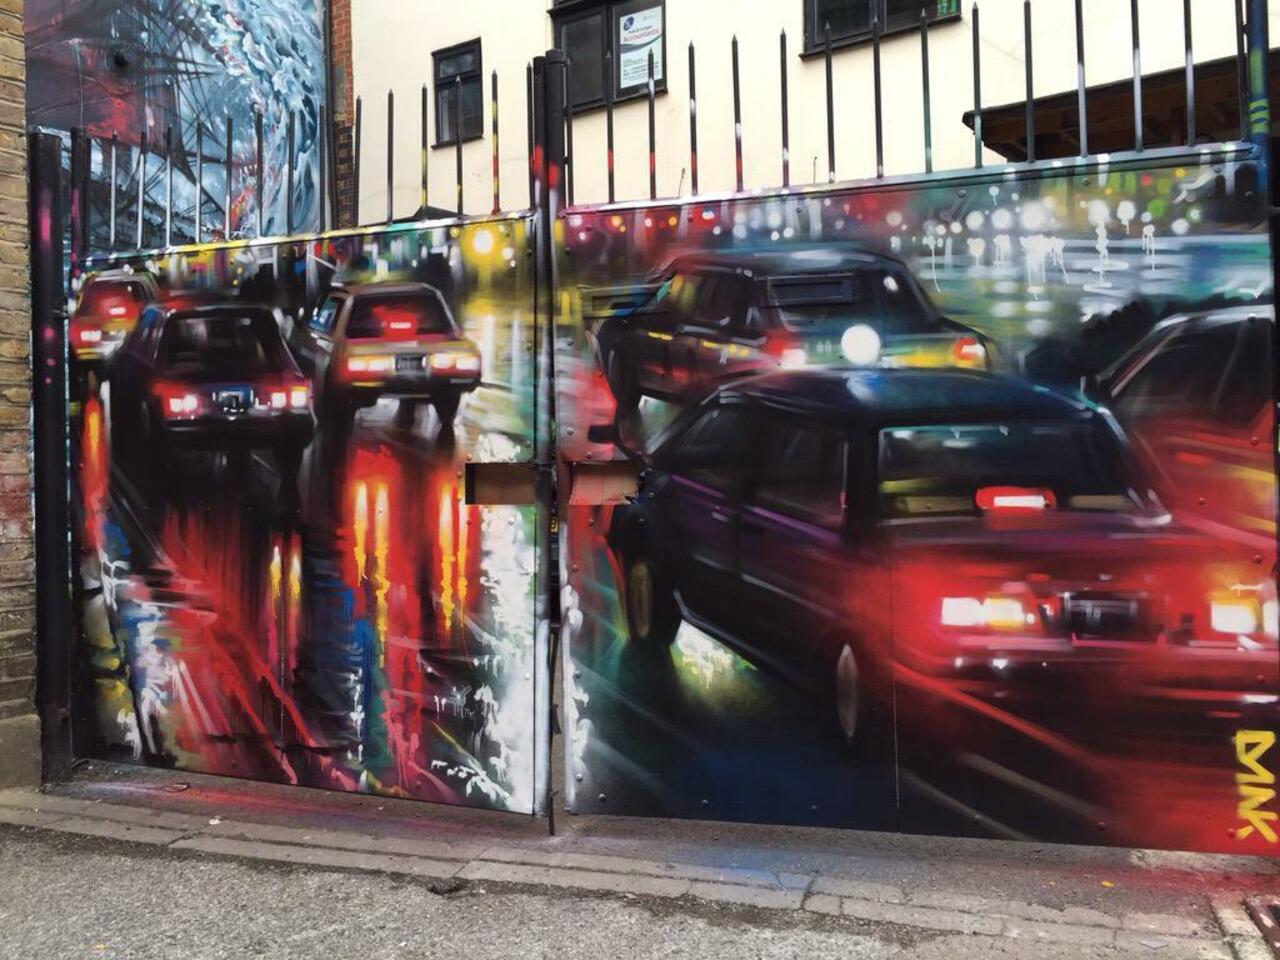 New Street Art by DanKitchener in Brick Lane London 

#art #graffiti #mural #streetart http://t.co/wT5RCYIrnF